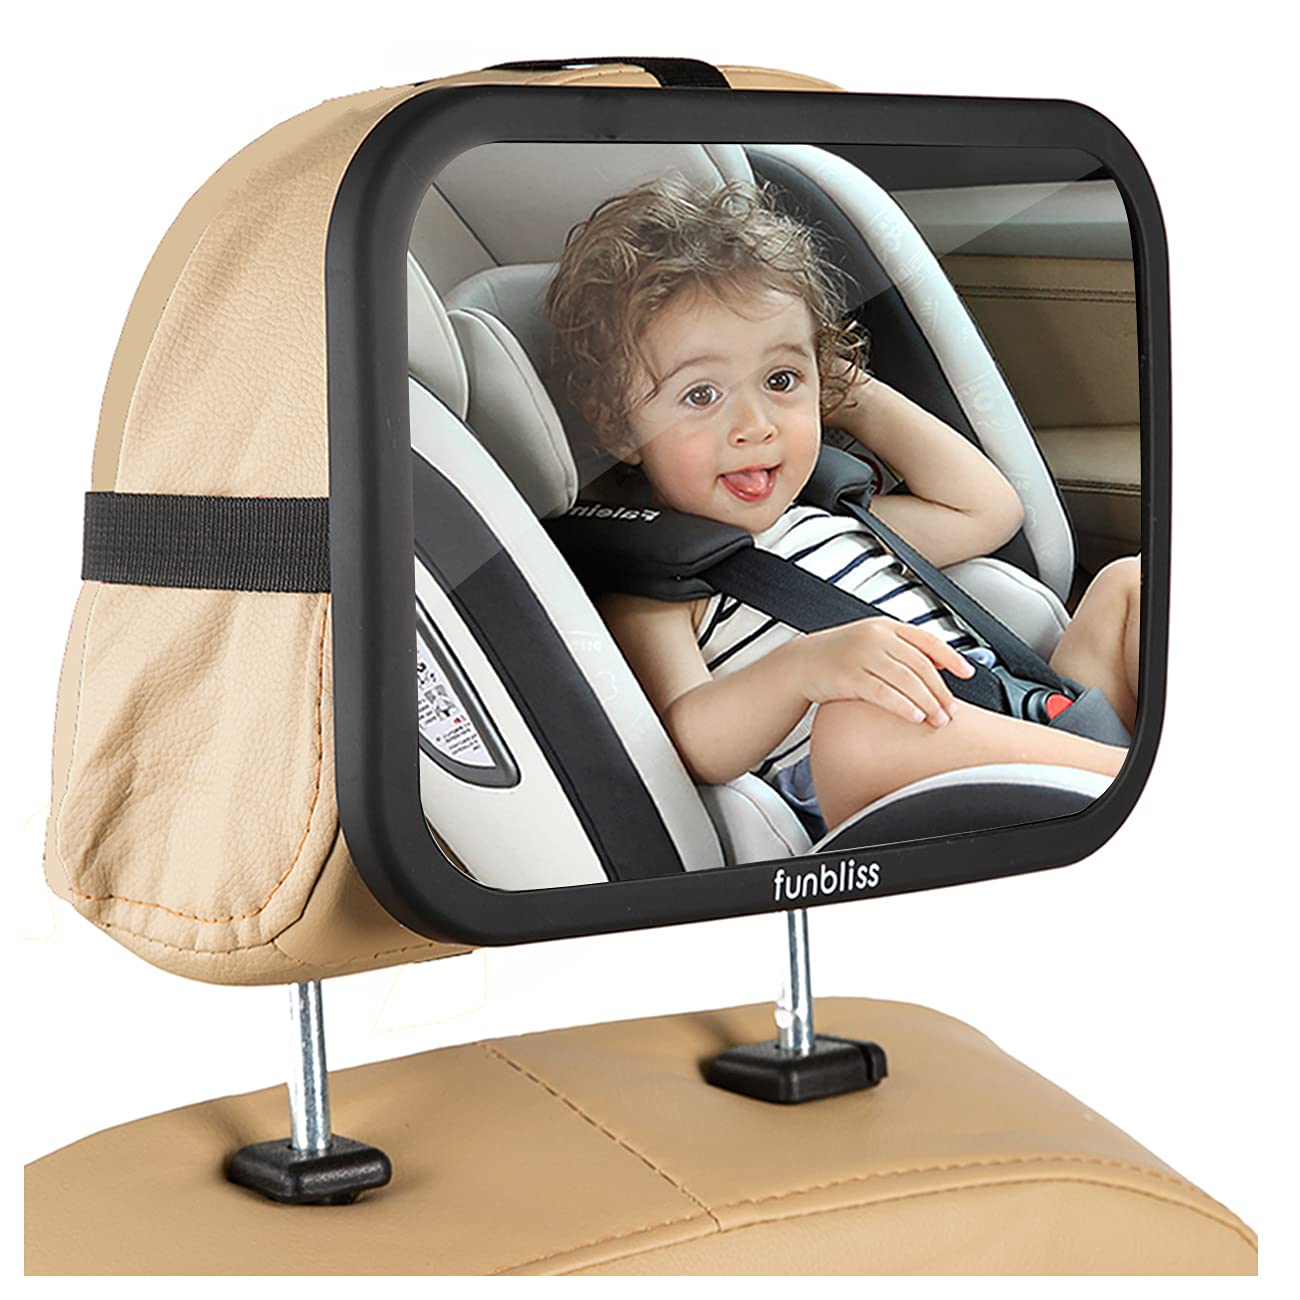 Baby Car Mirror Most Stable Backseat Mirror with Premium Matte Finish-Super Clear PMMA Material Mirror-Safe, Secure and Shatterproof,Black Autositzspiegel für Babys. von Funbliss